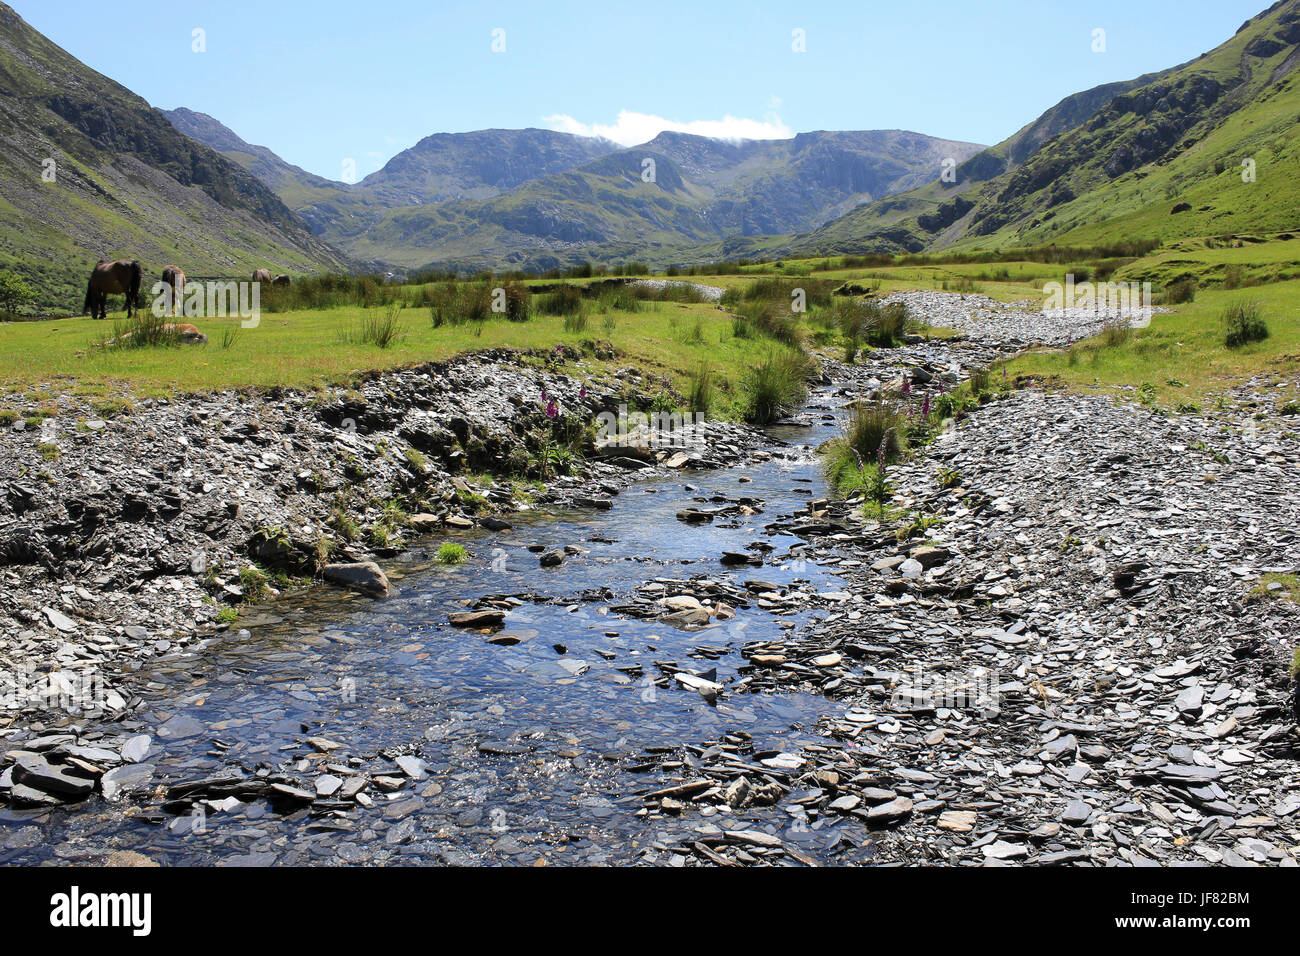 Afon Ogwen River In the Nant Ffrancon Valley, Snowdonia, Wales Stock Photo